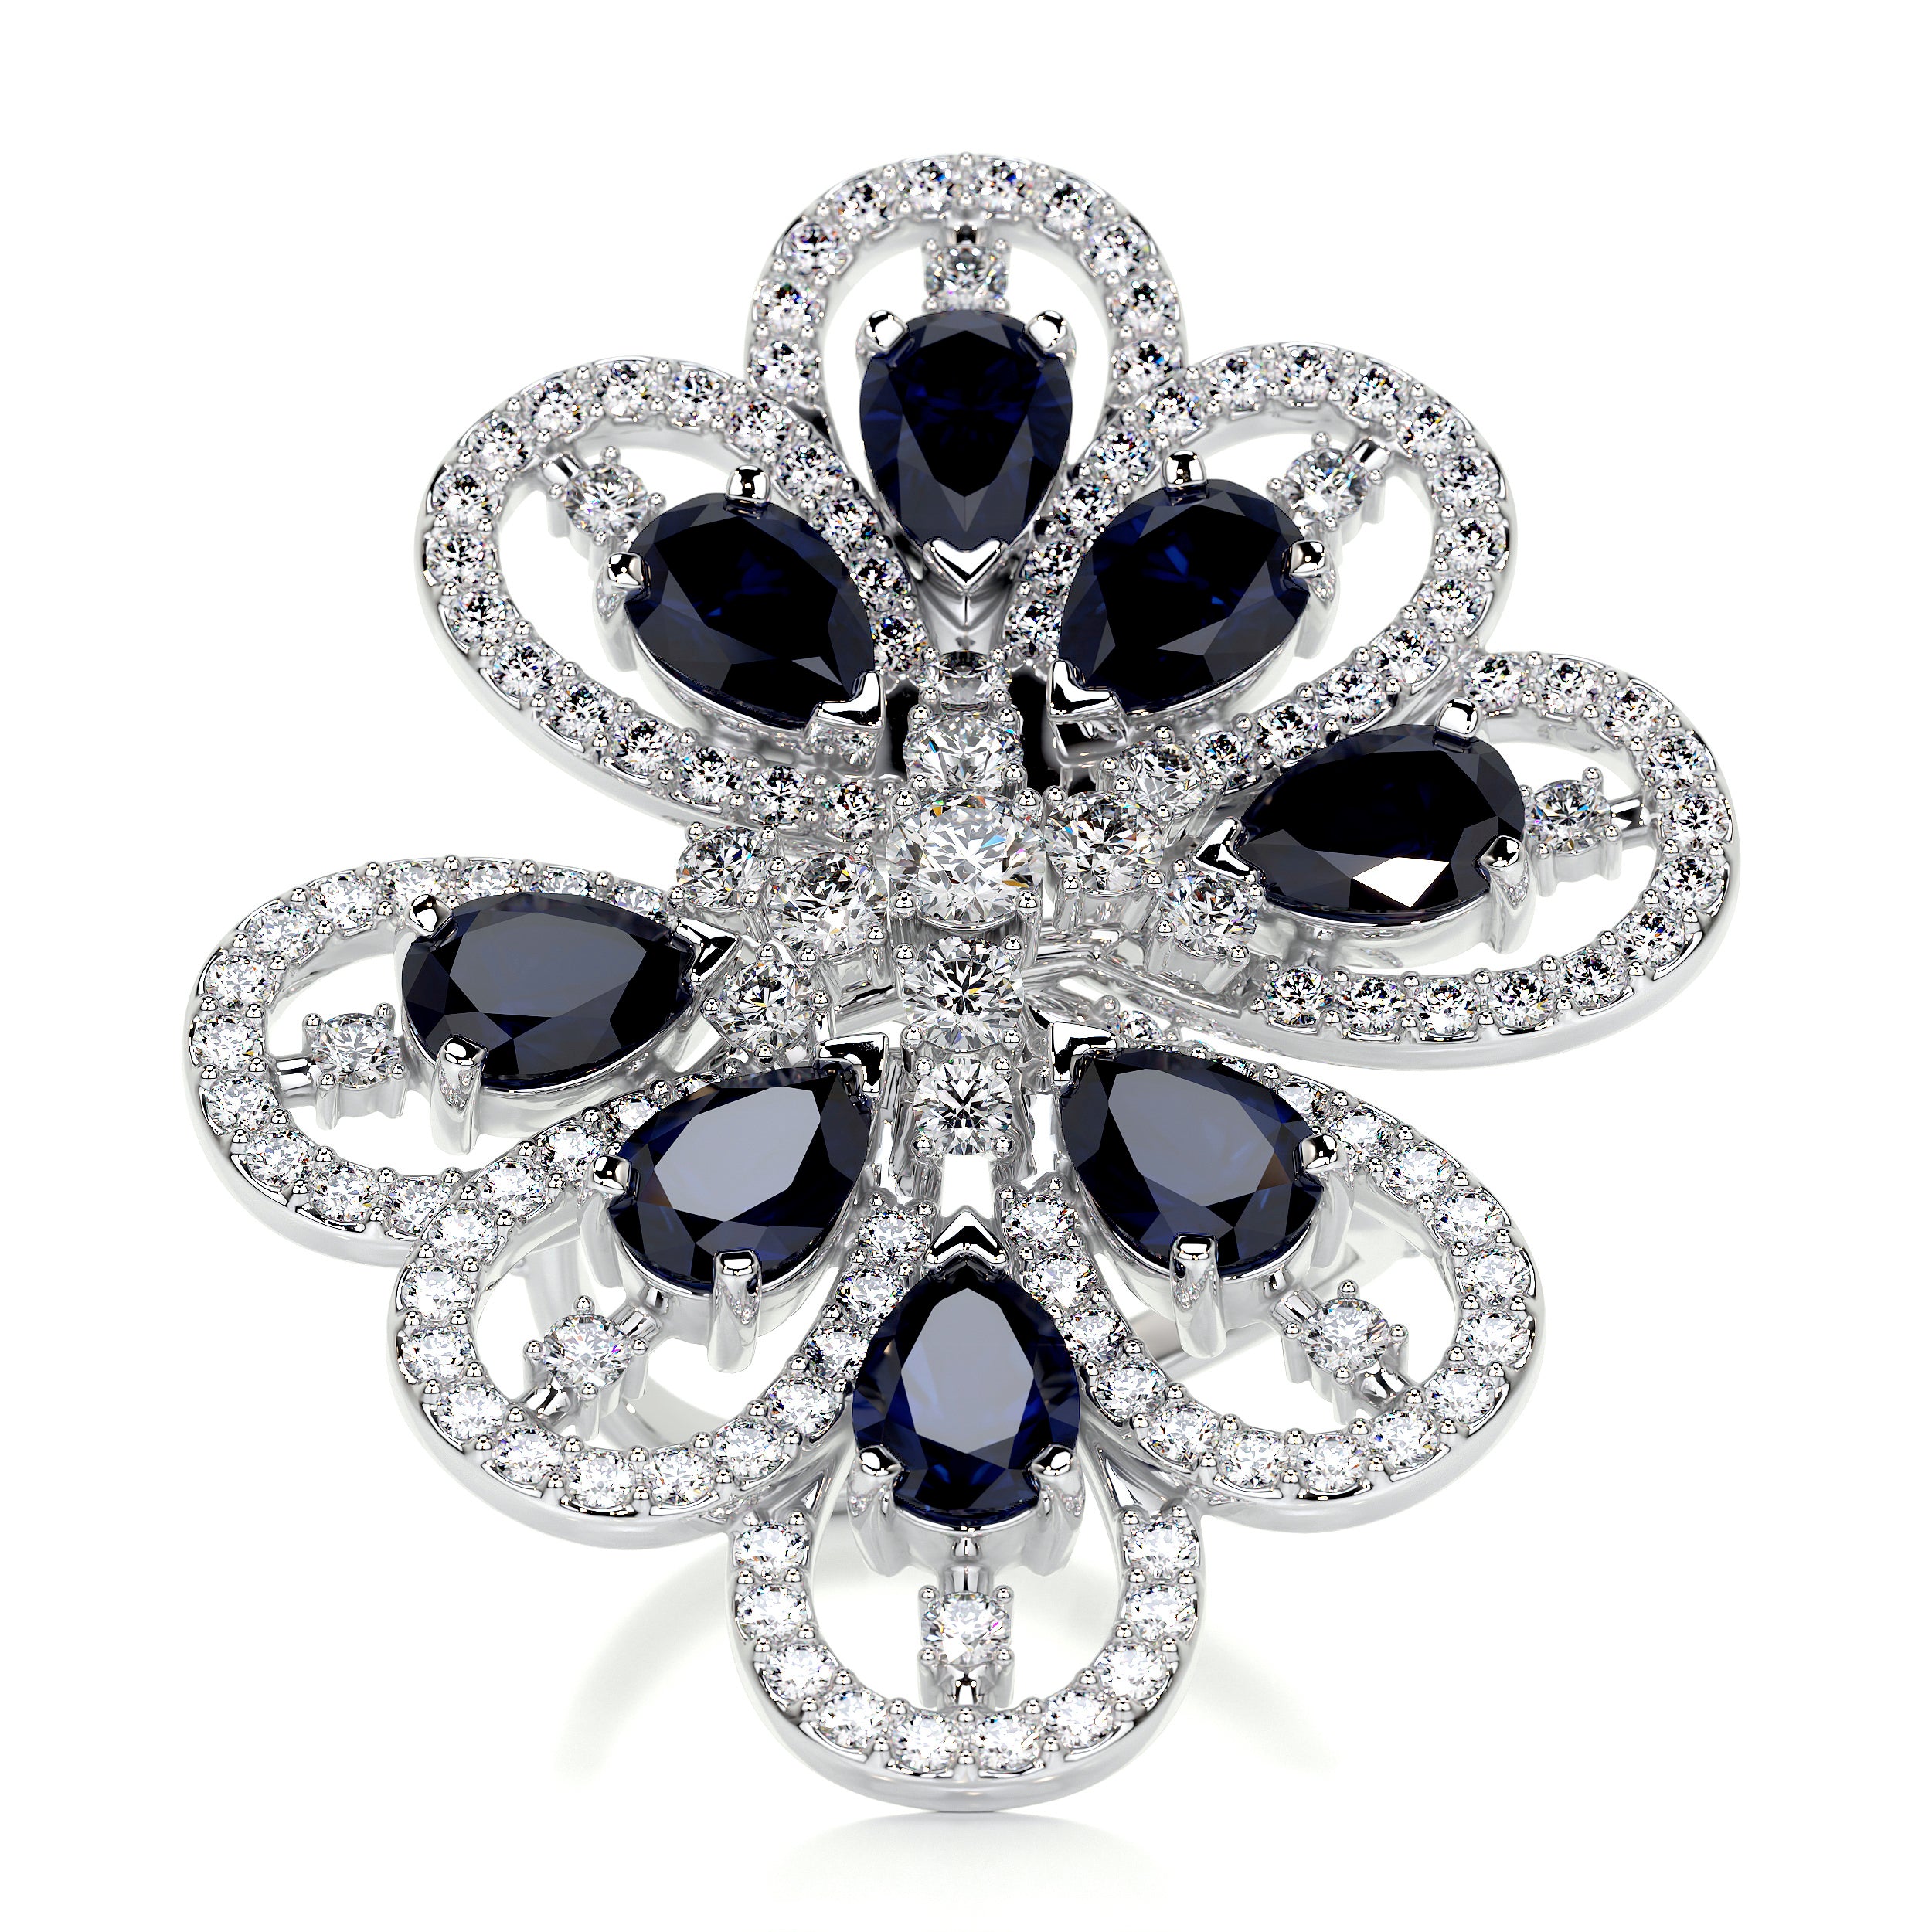 Jayden Fashion Gemstones & Diamonds Ring   (4.55 Carat) -18K White Gold